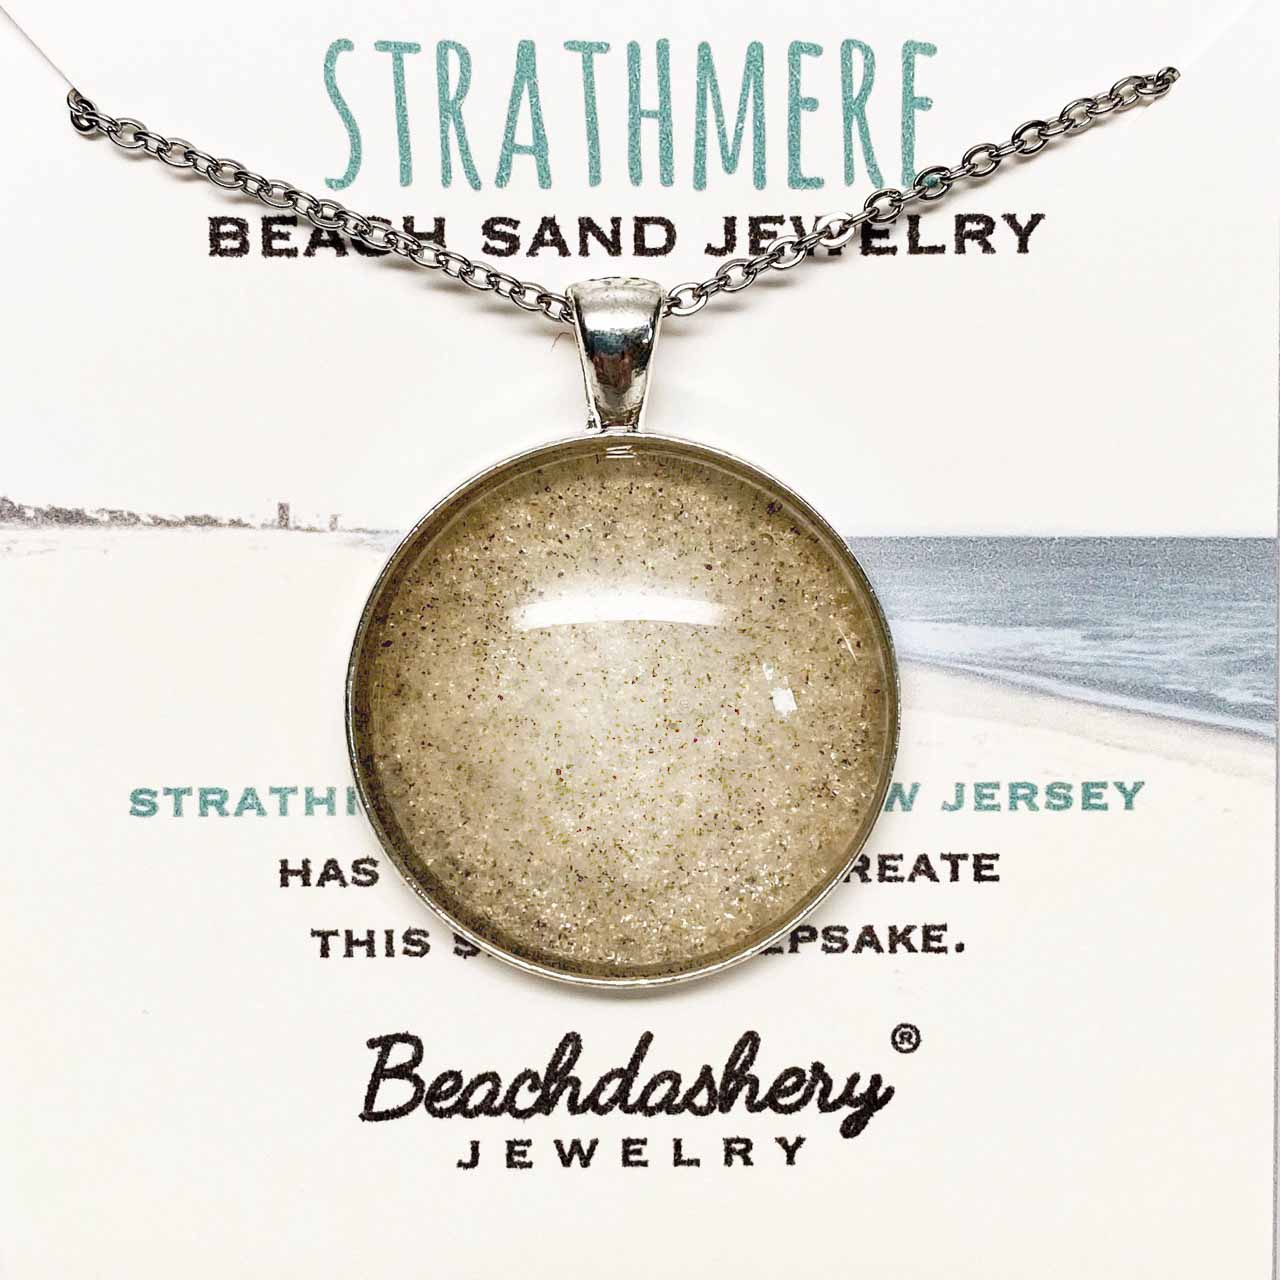 Strathmere Beach New Jersey Sand Jewelry Beachdashery